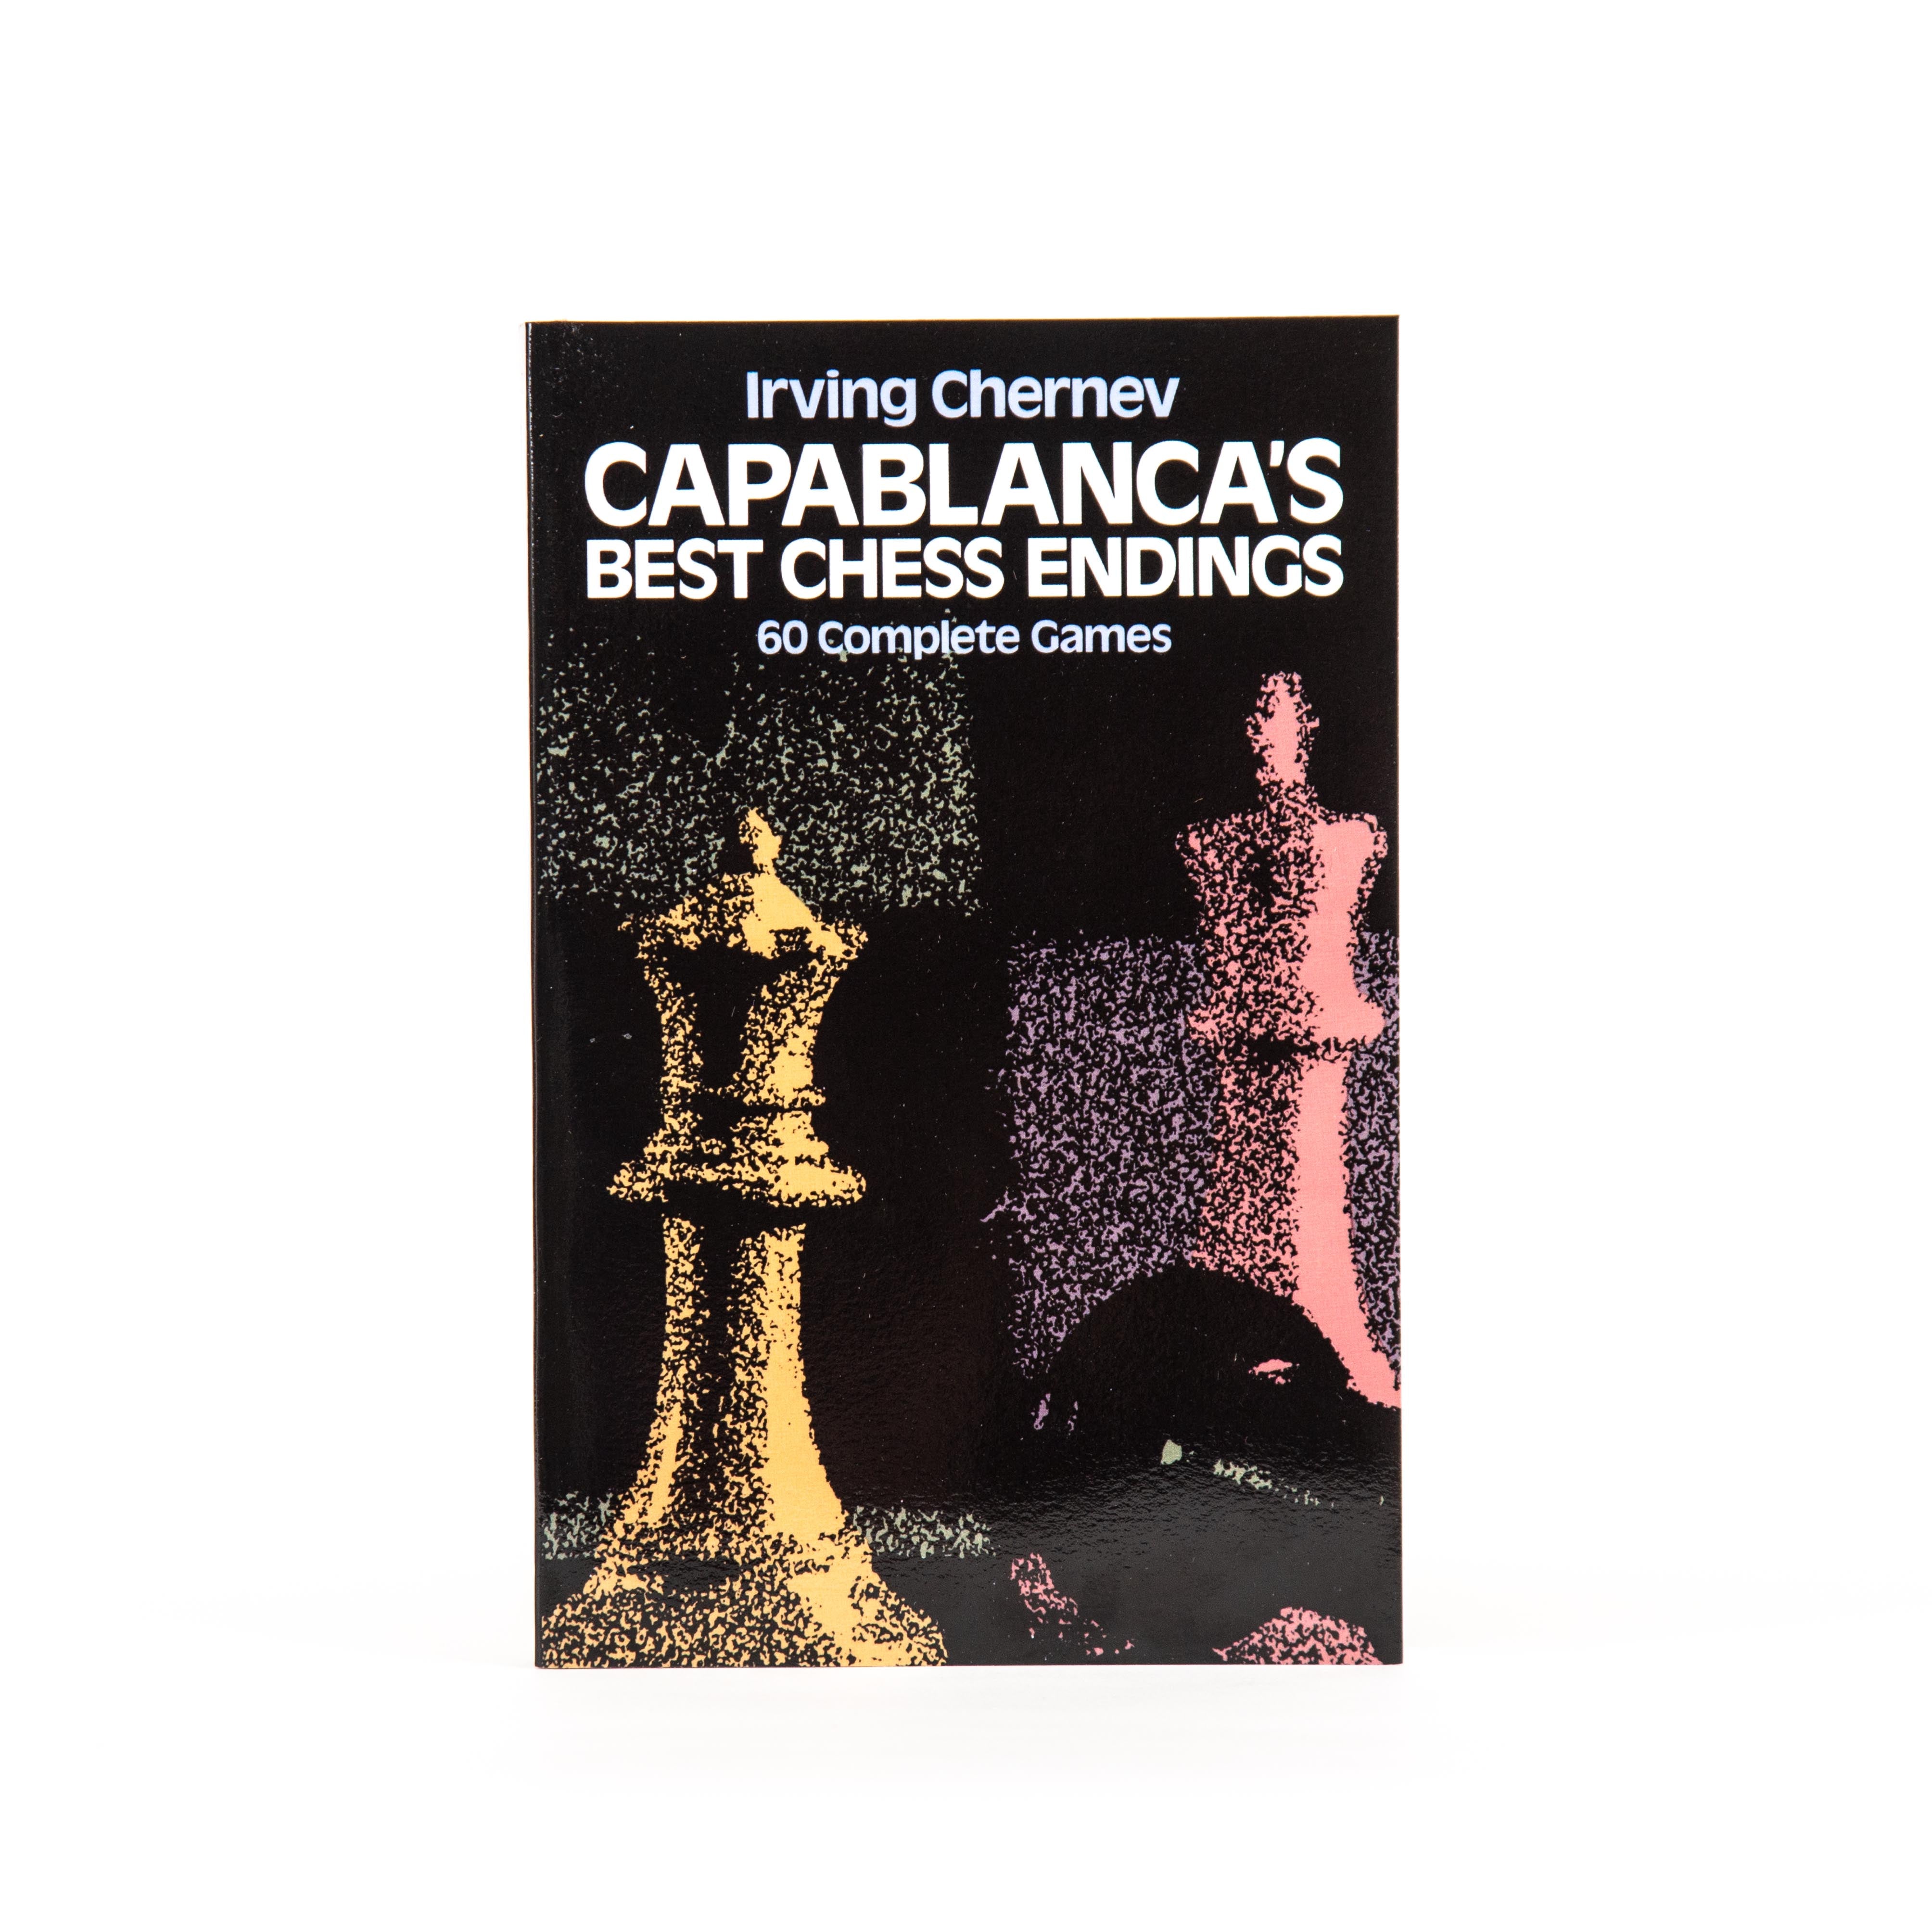 José Raúl Capablanca  World Chess Hall of Fame